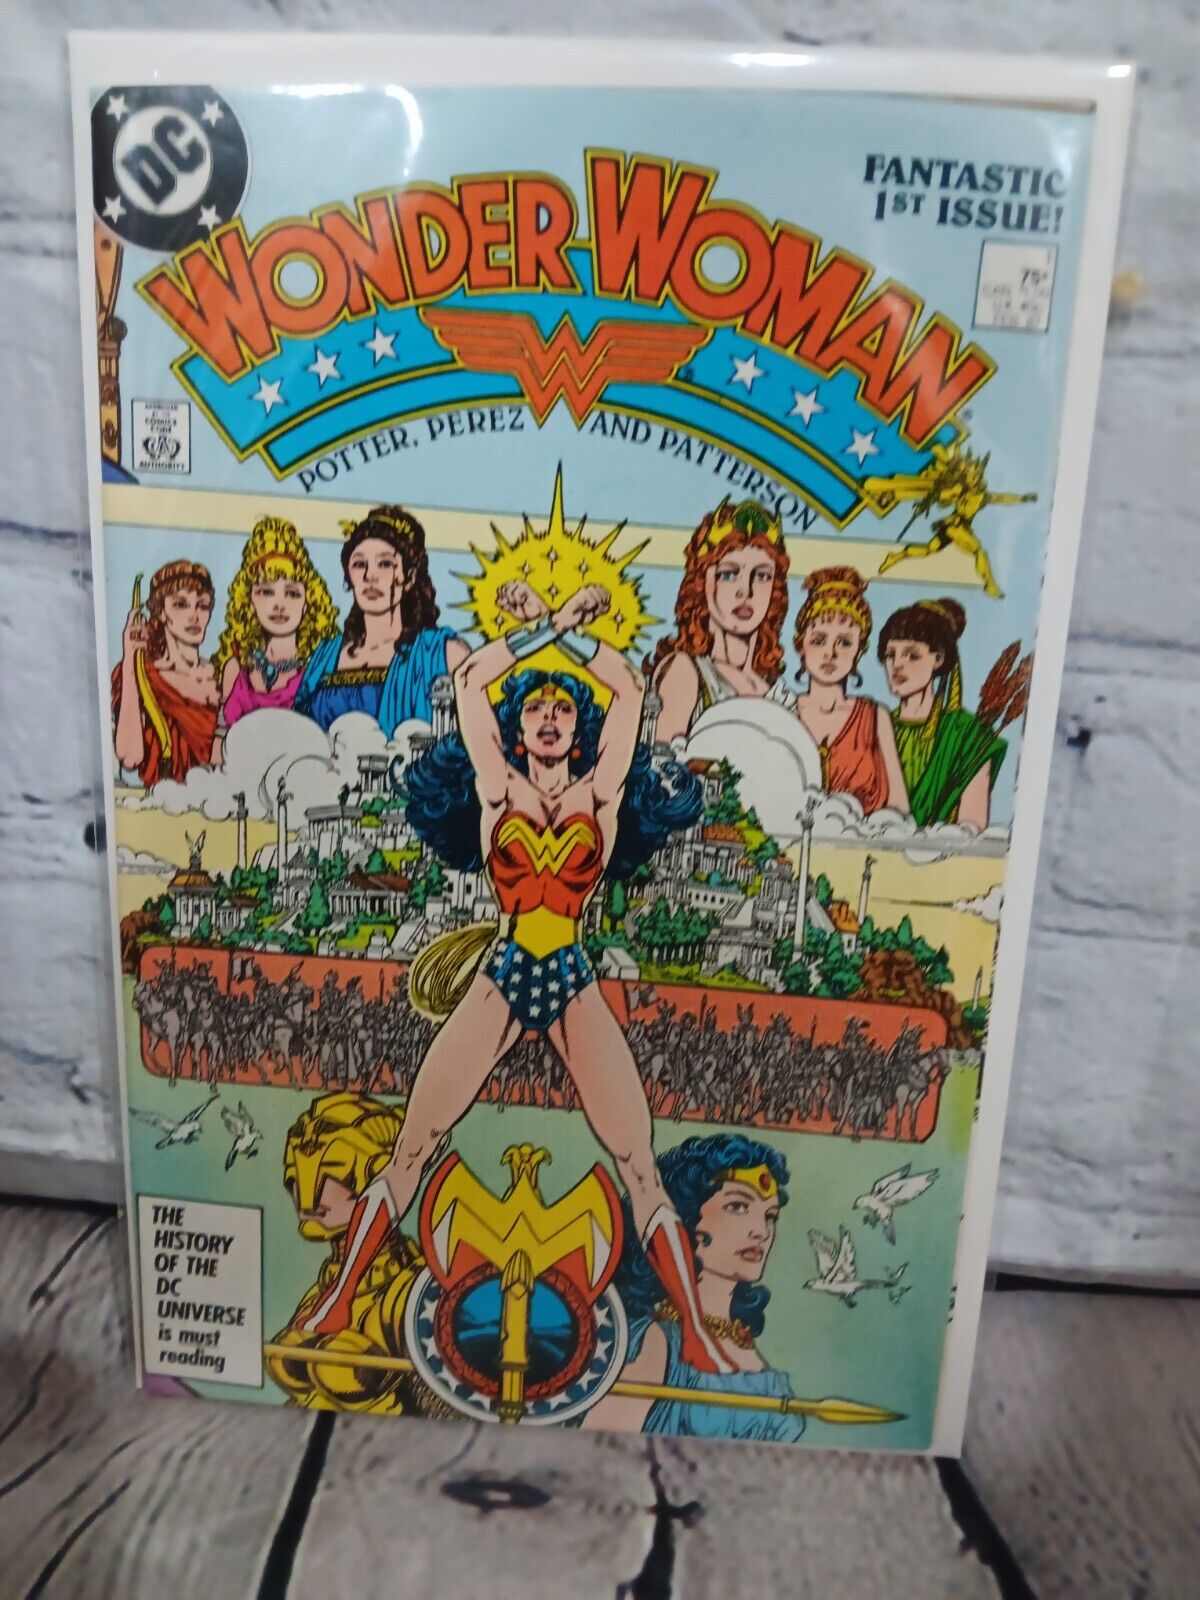 Wondern Woman comic books